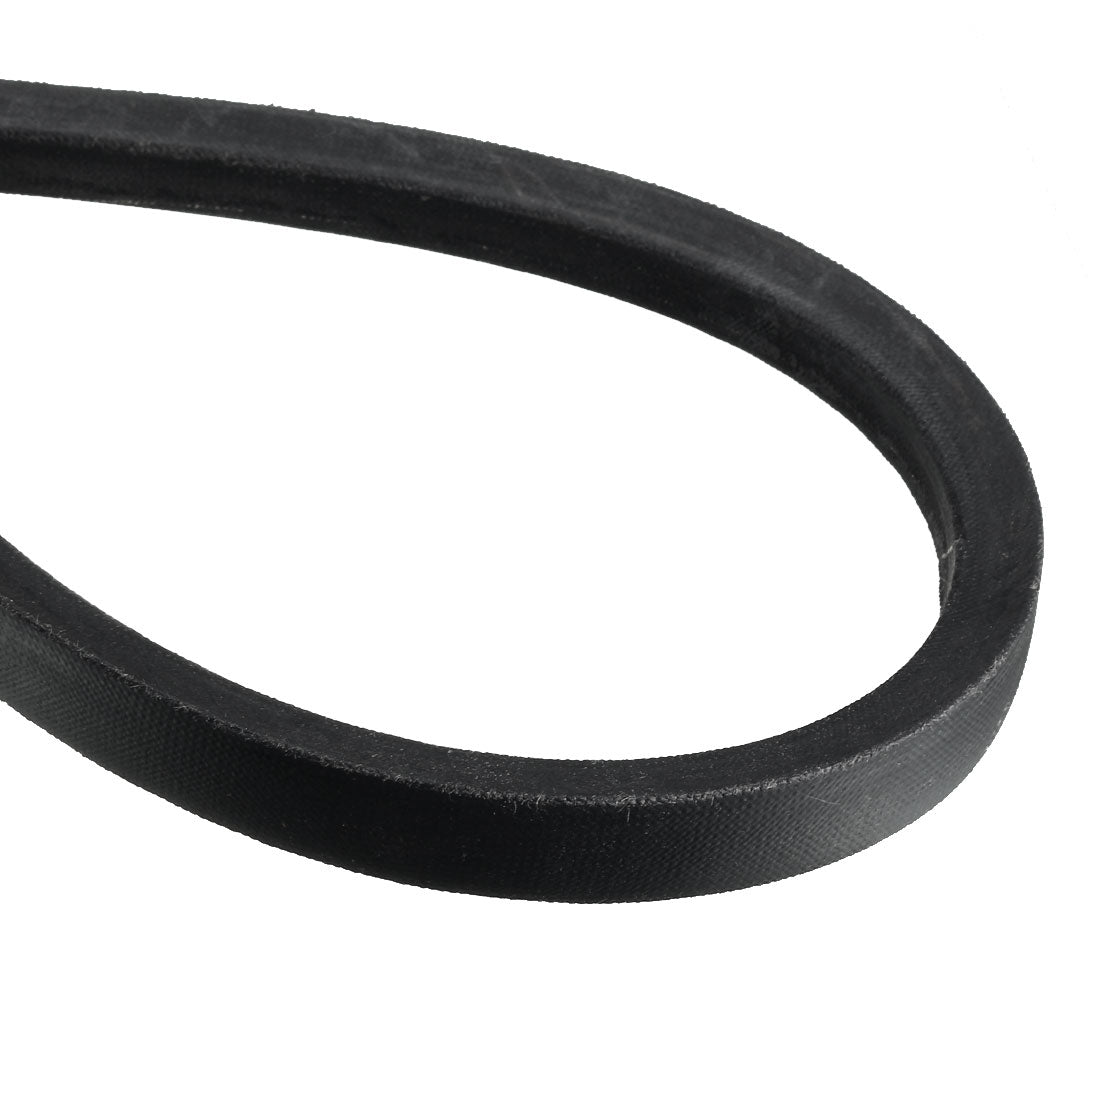 uxcell Uxcell B69 V-Belts 69" Pitch Length, B-Section Rubber Drive Belt 2pcs